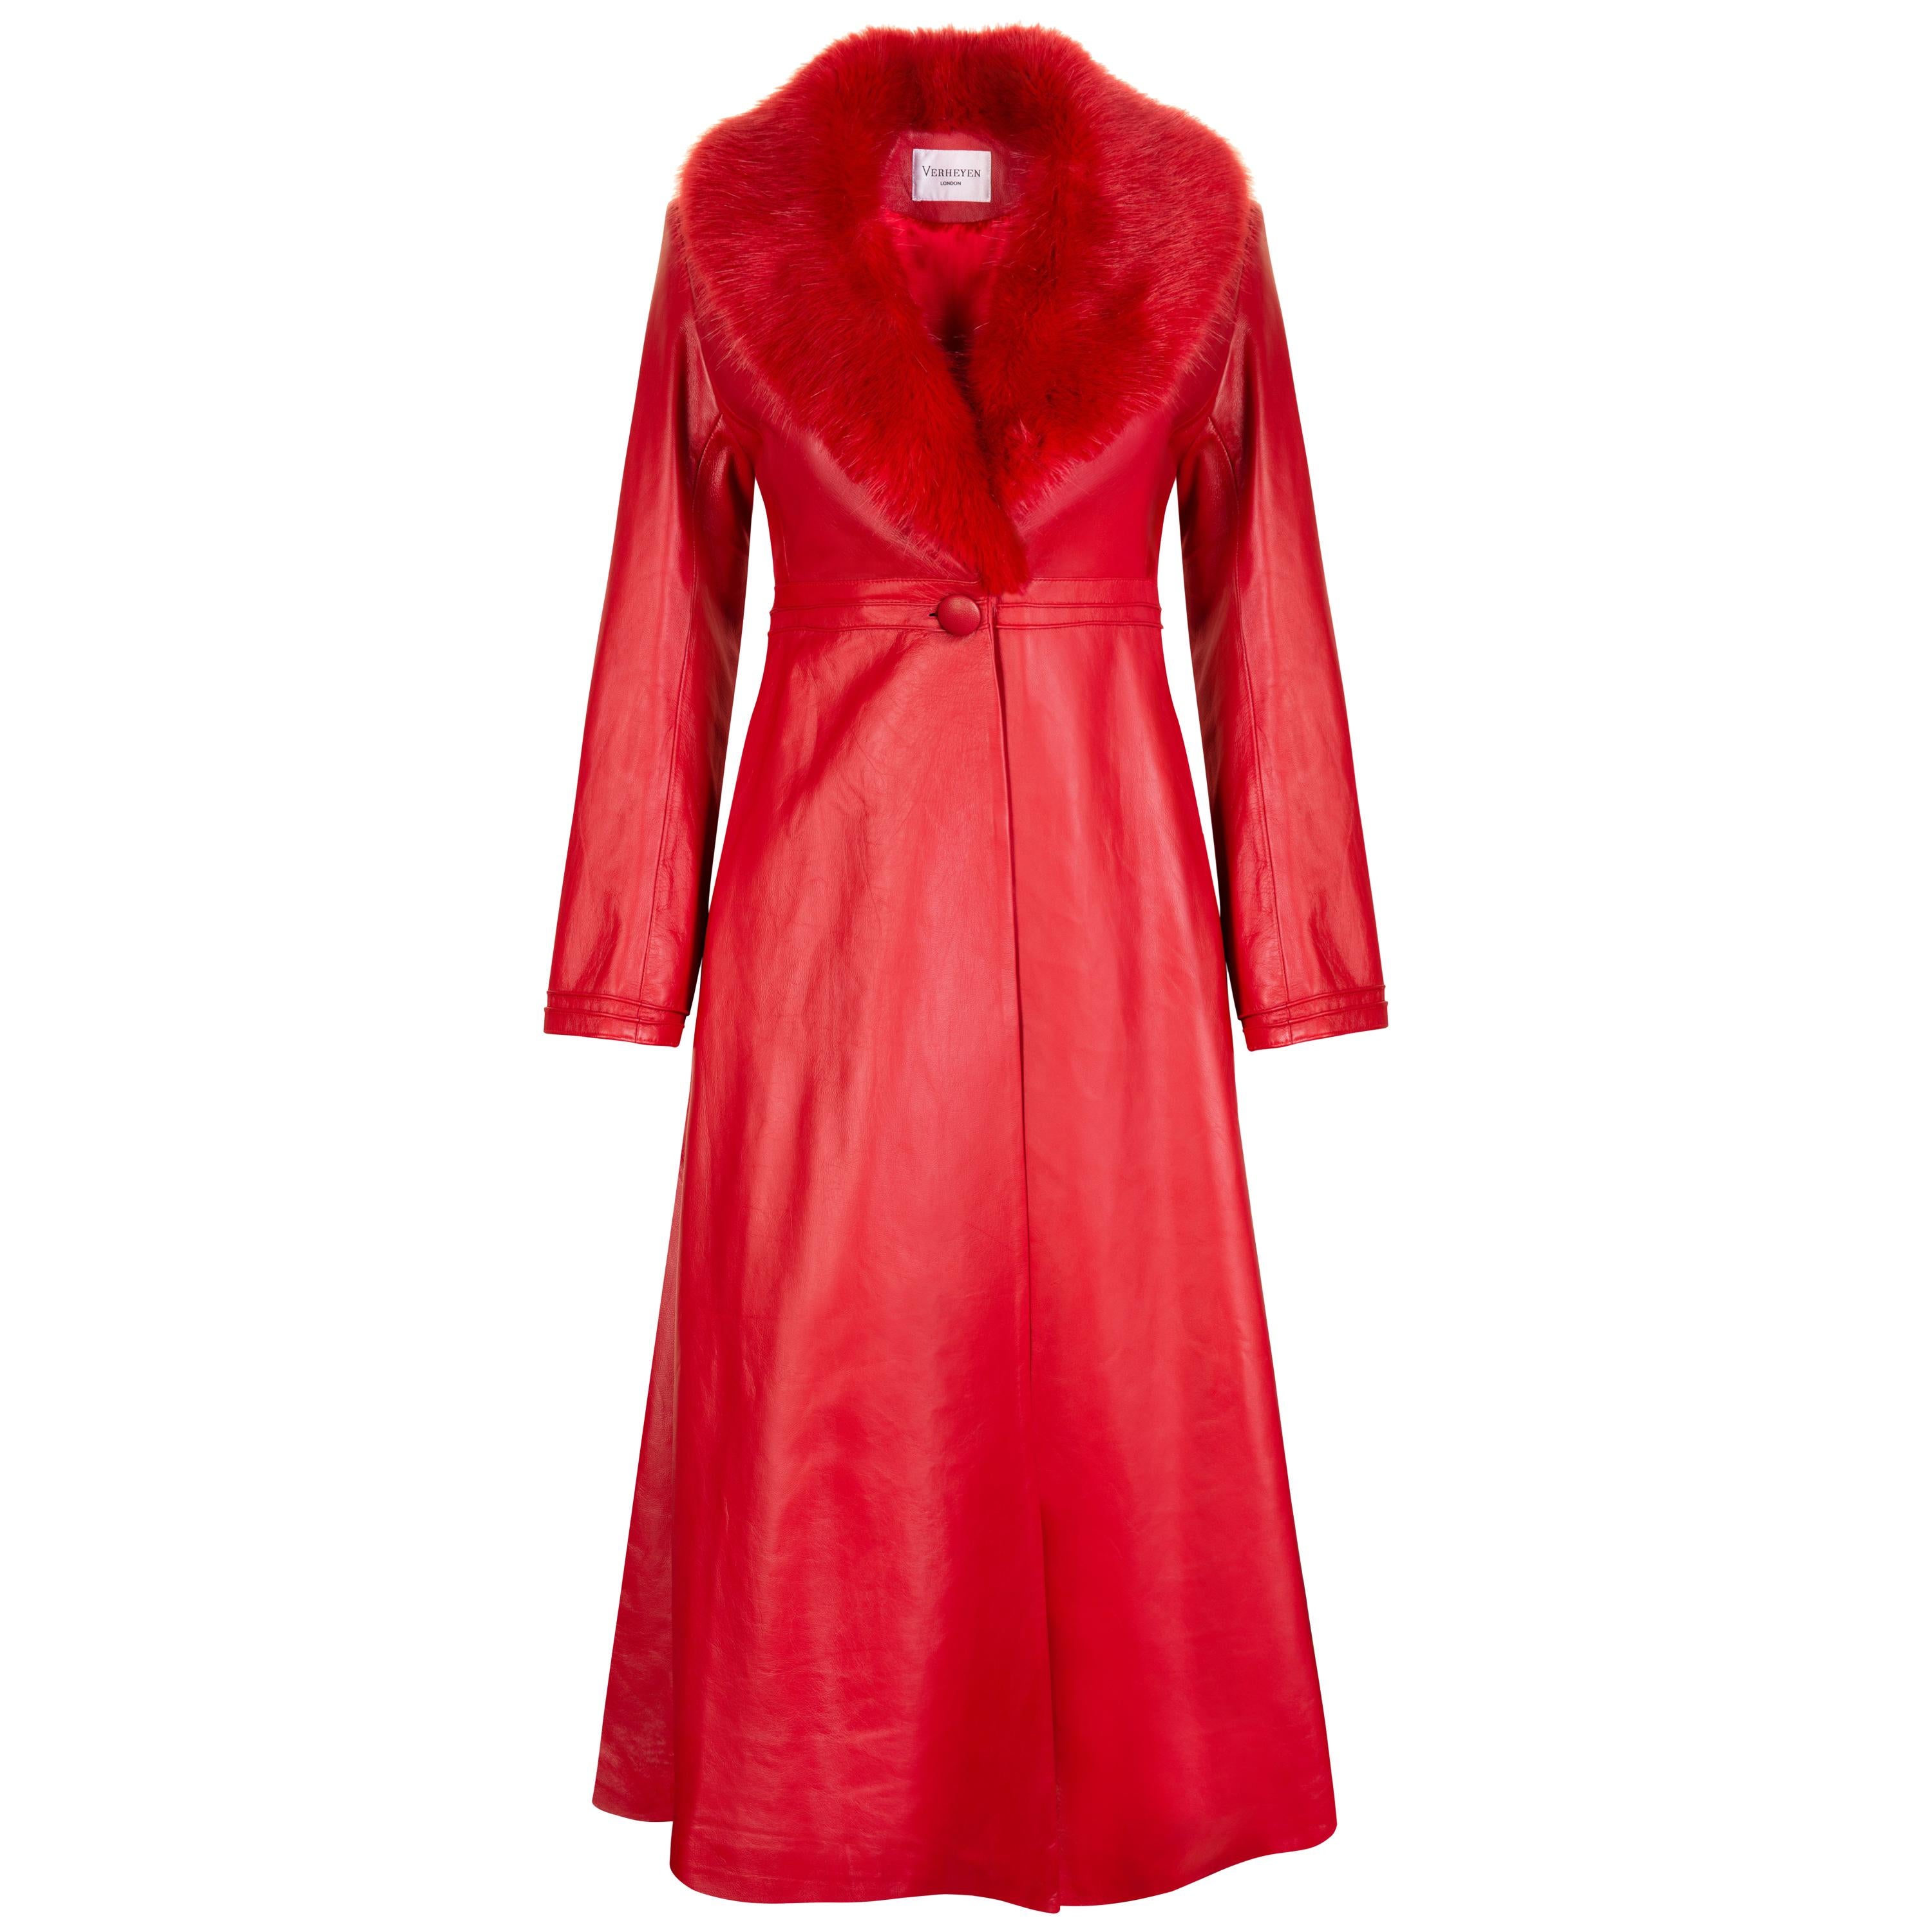 Verheyen London Edward Leather Coat with Faux Fur Collar in Red - Size uk 10